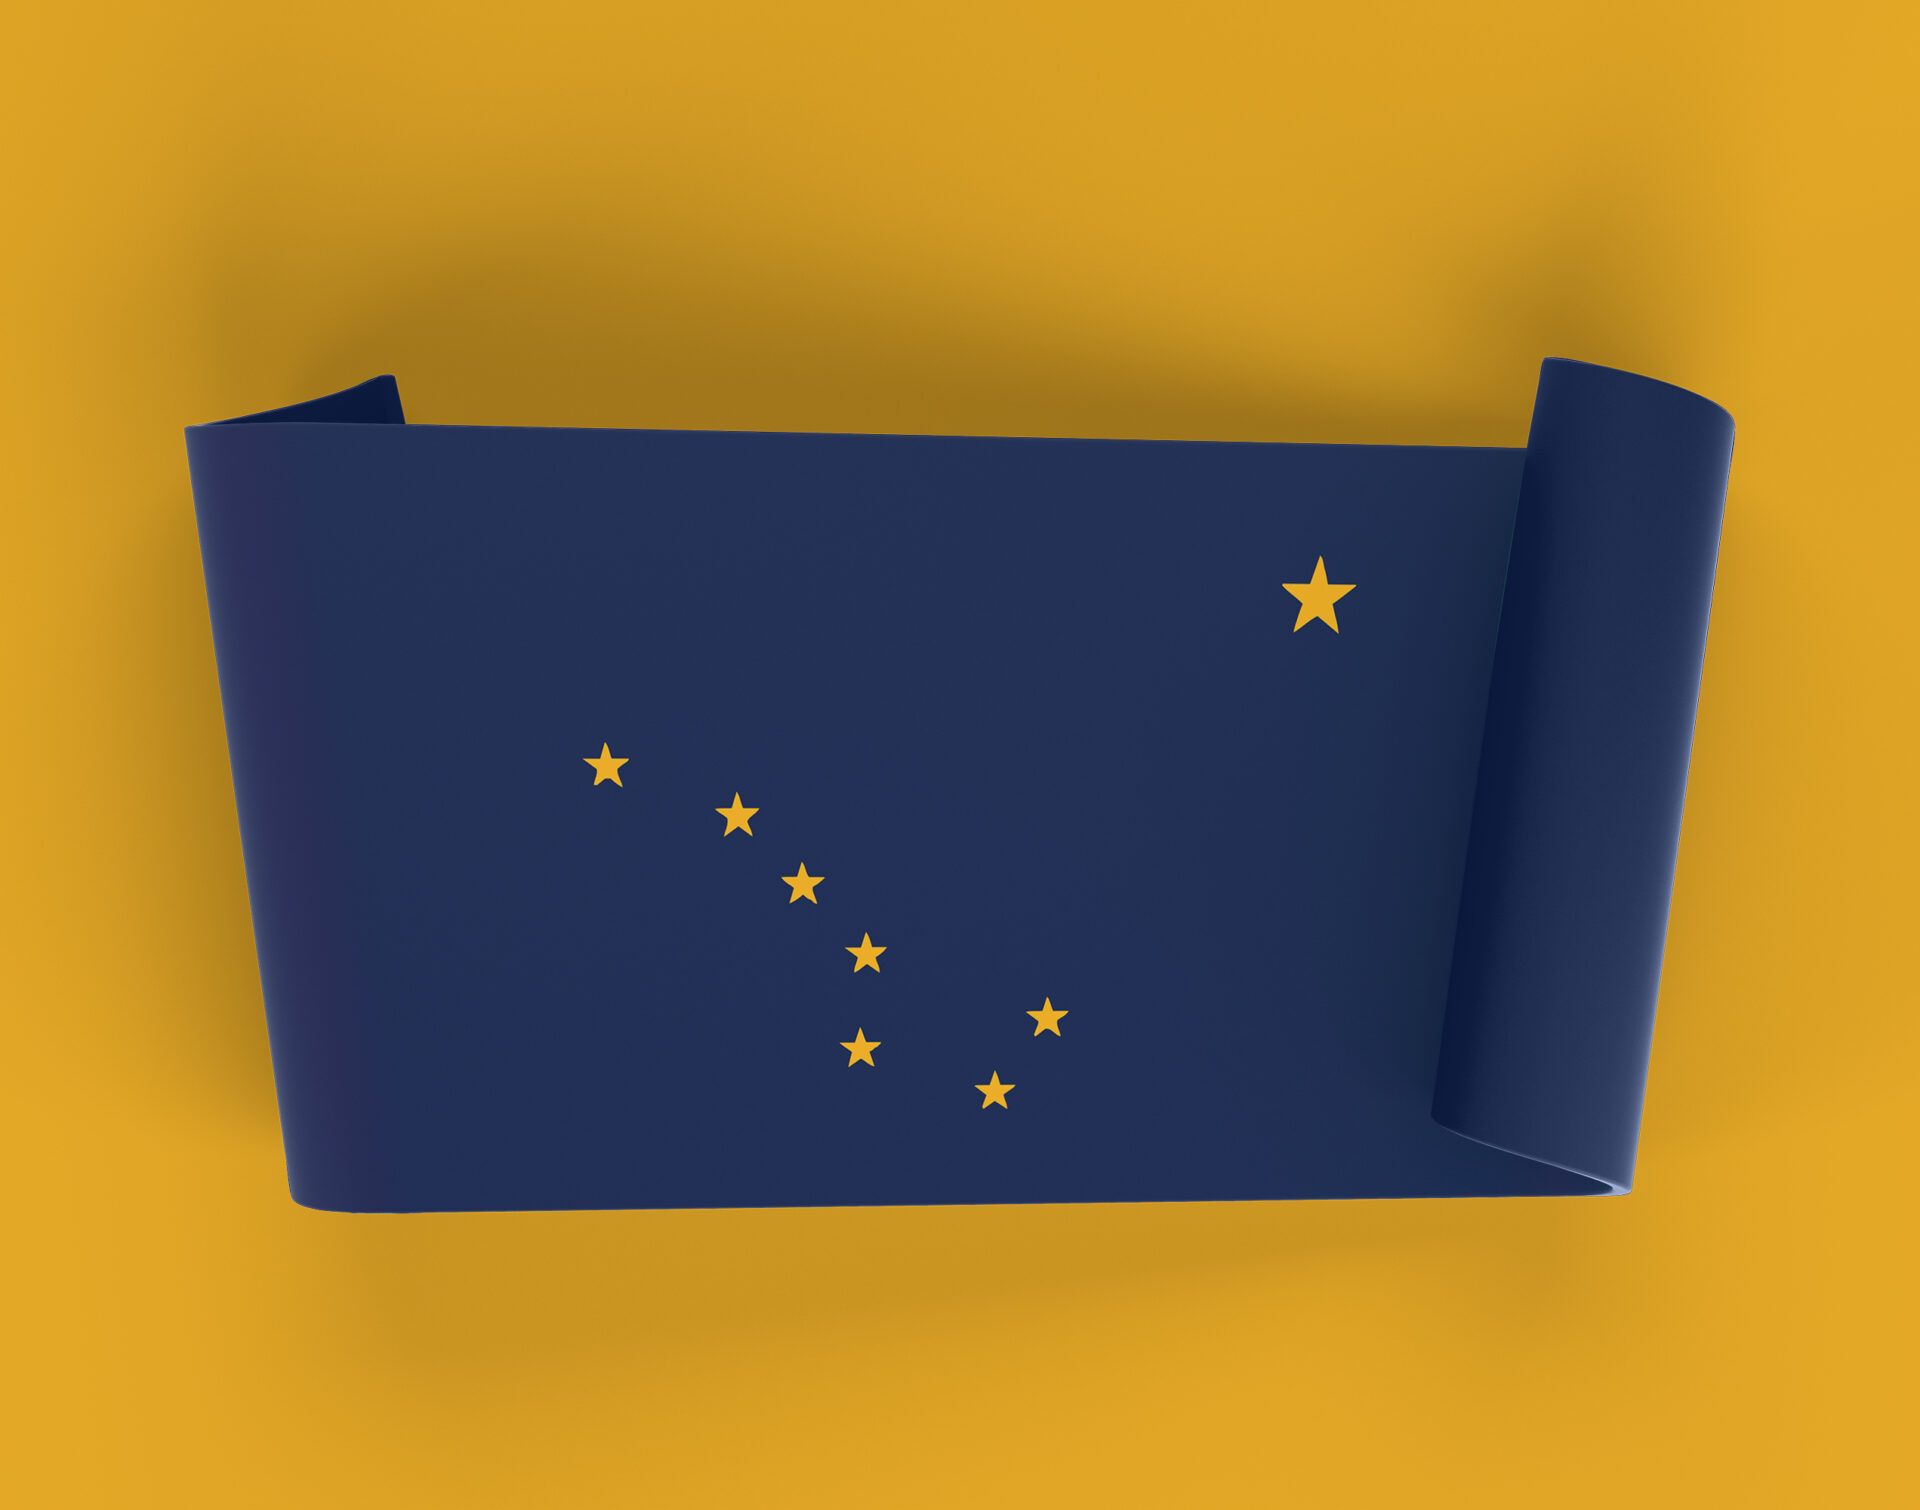 Alaska state flag on yellow background